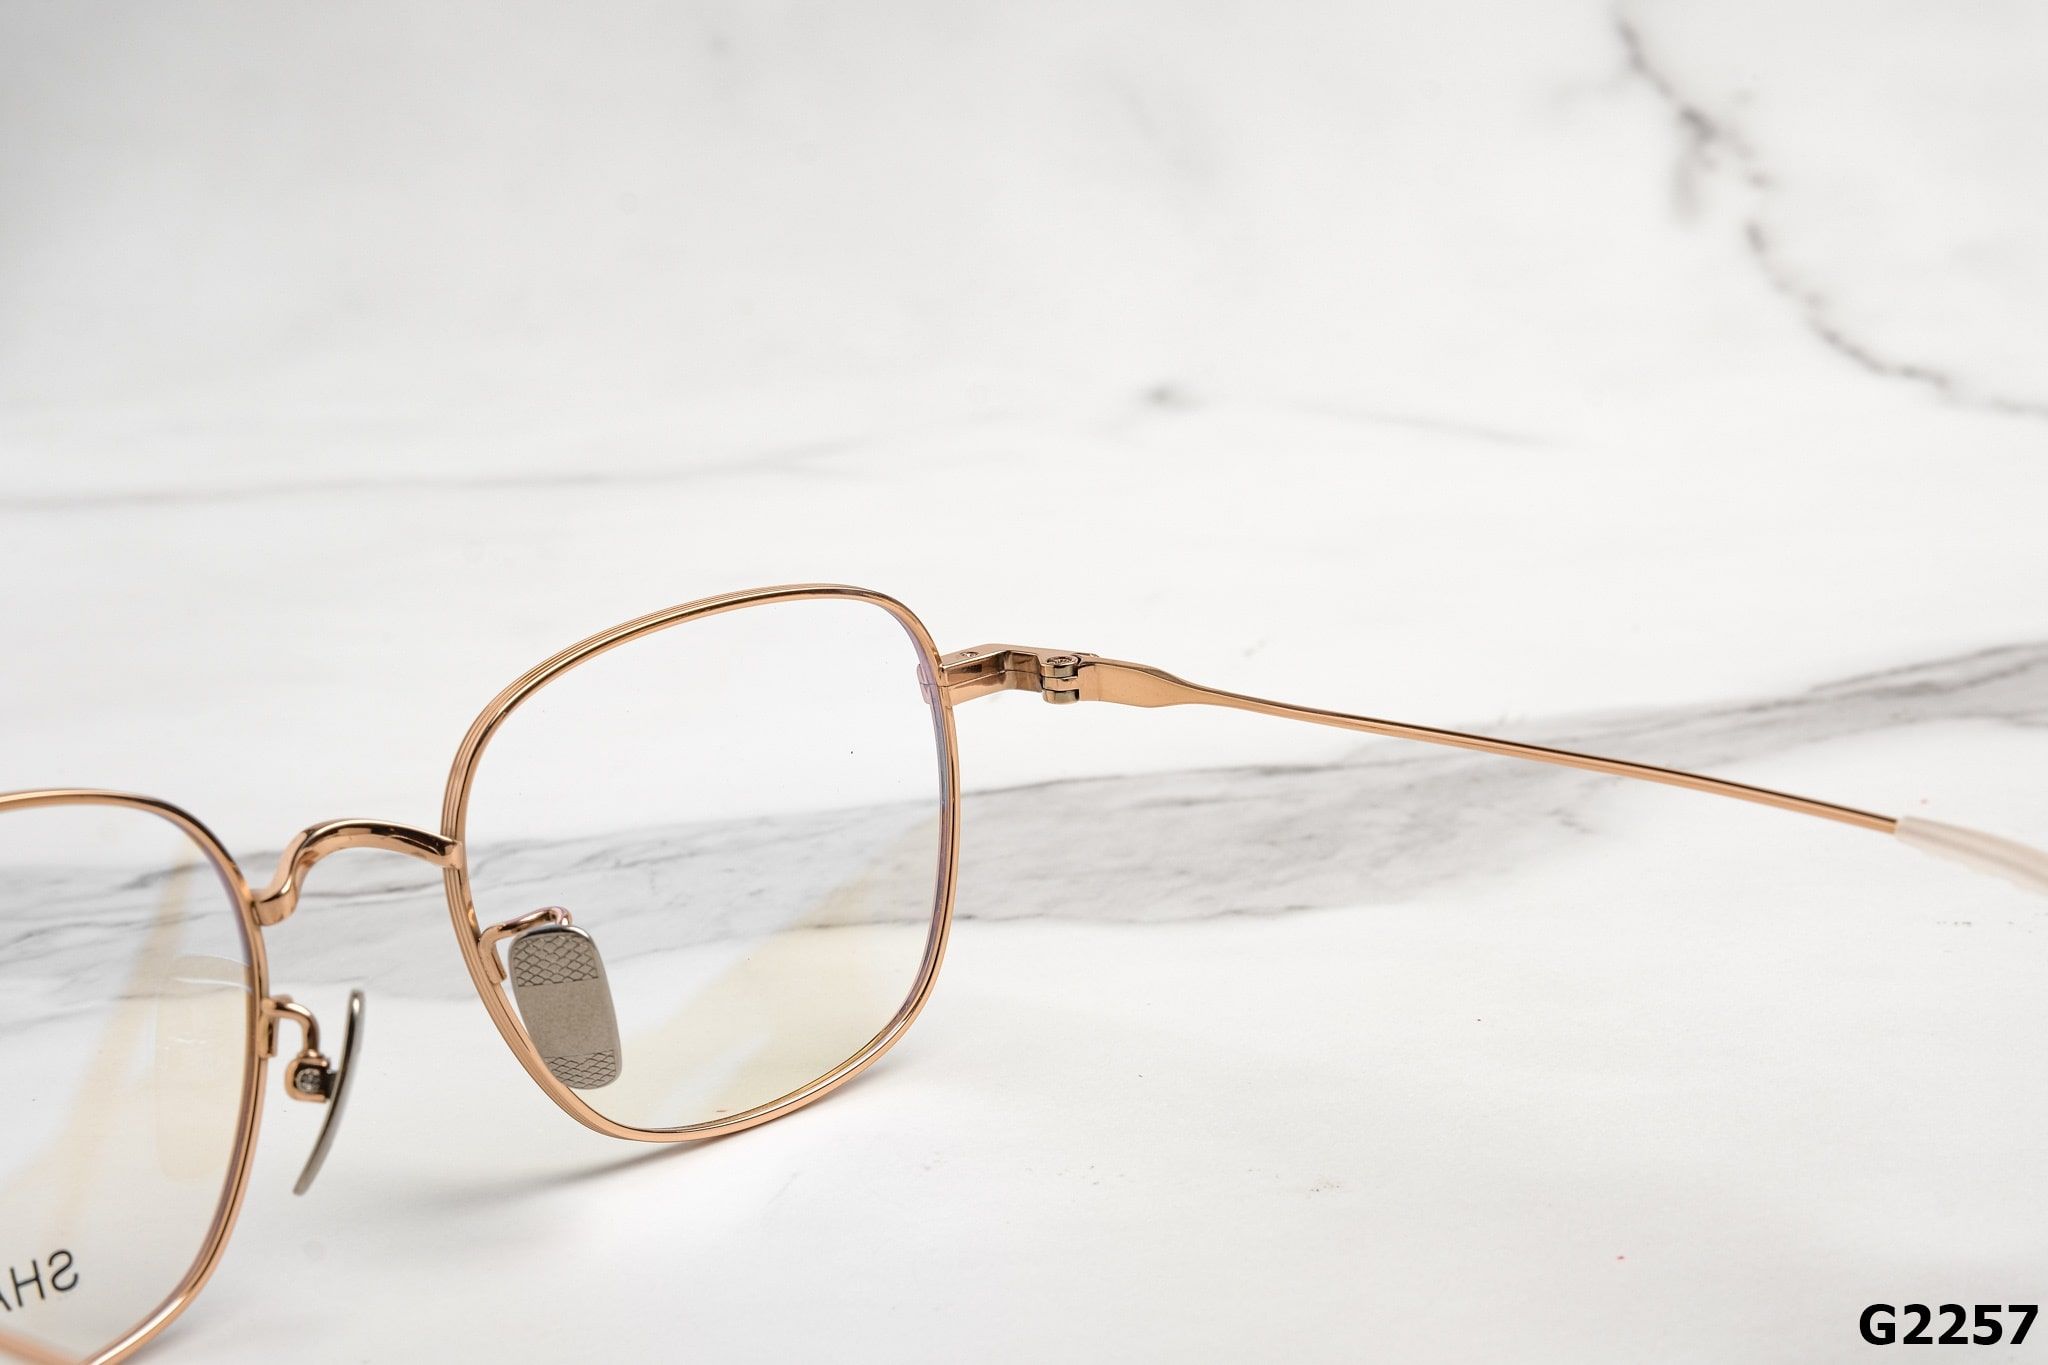  SHADY Eyewear - Glasses - G2257 